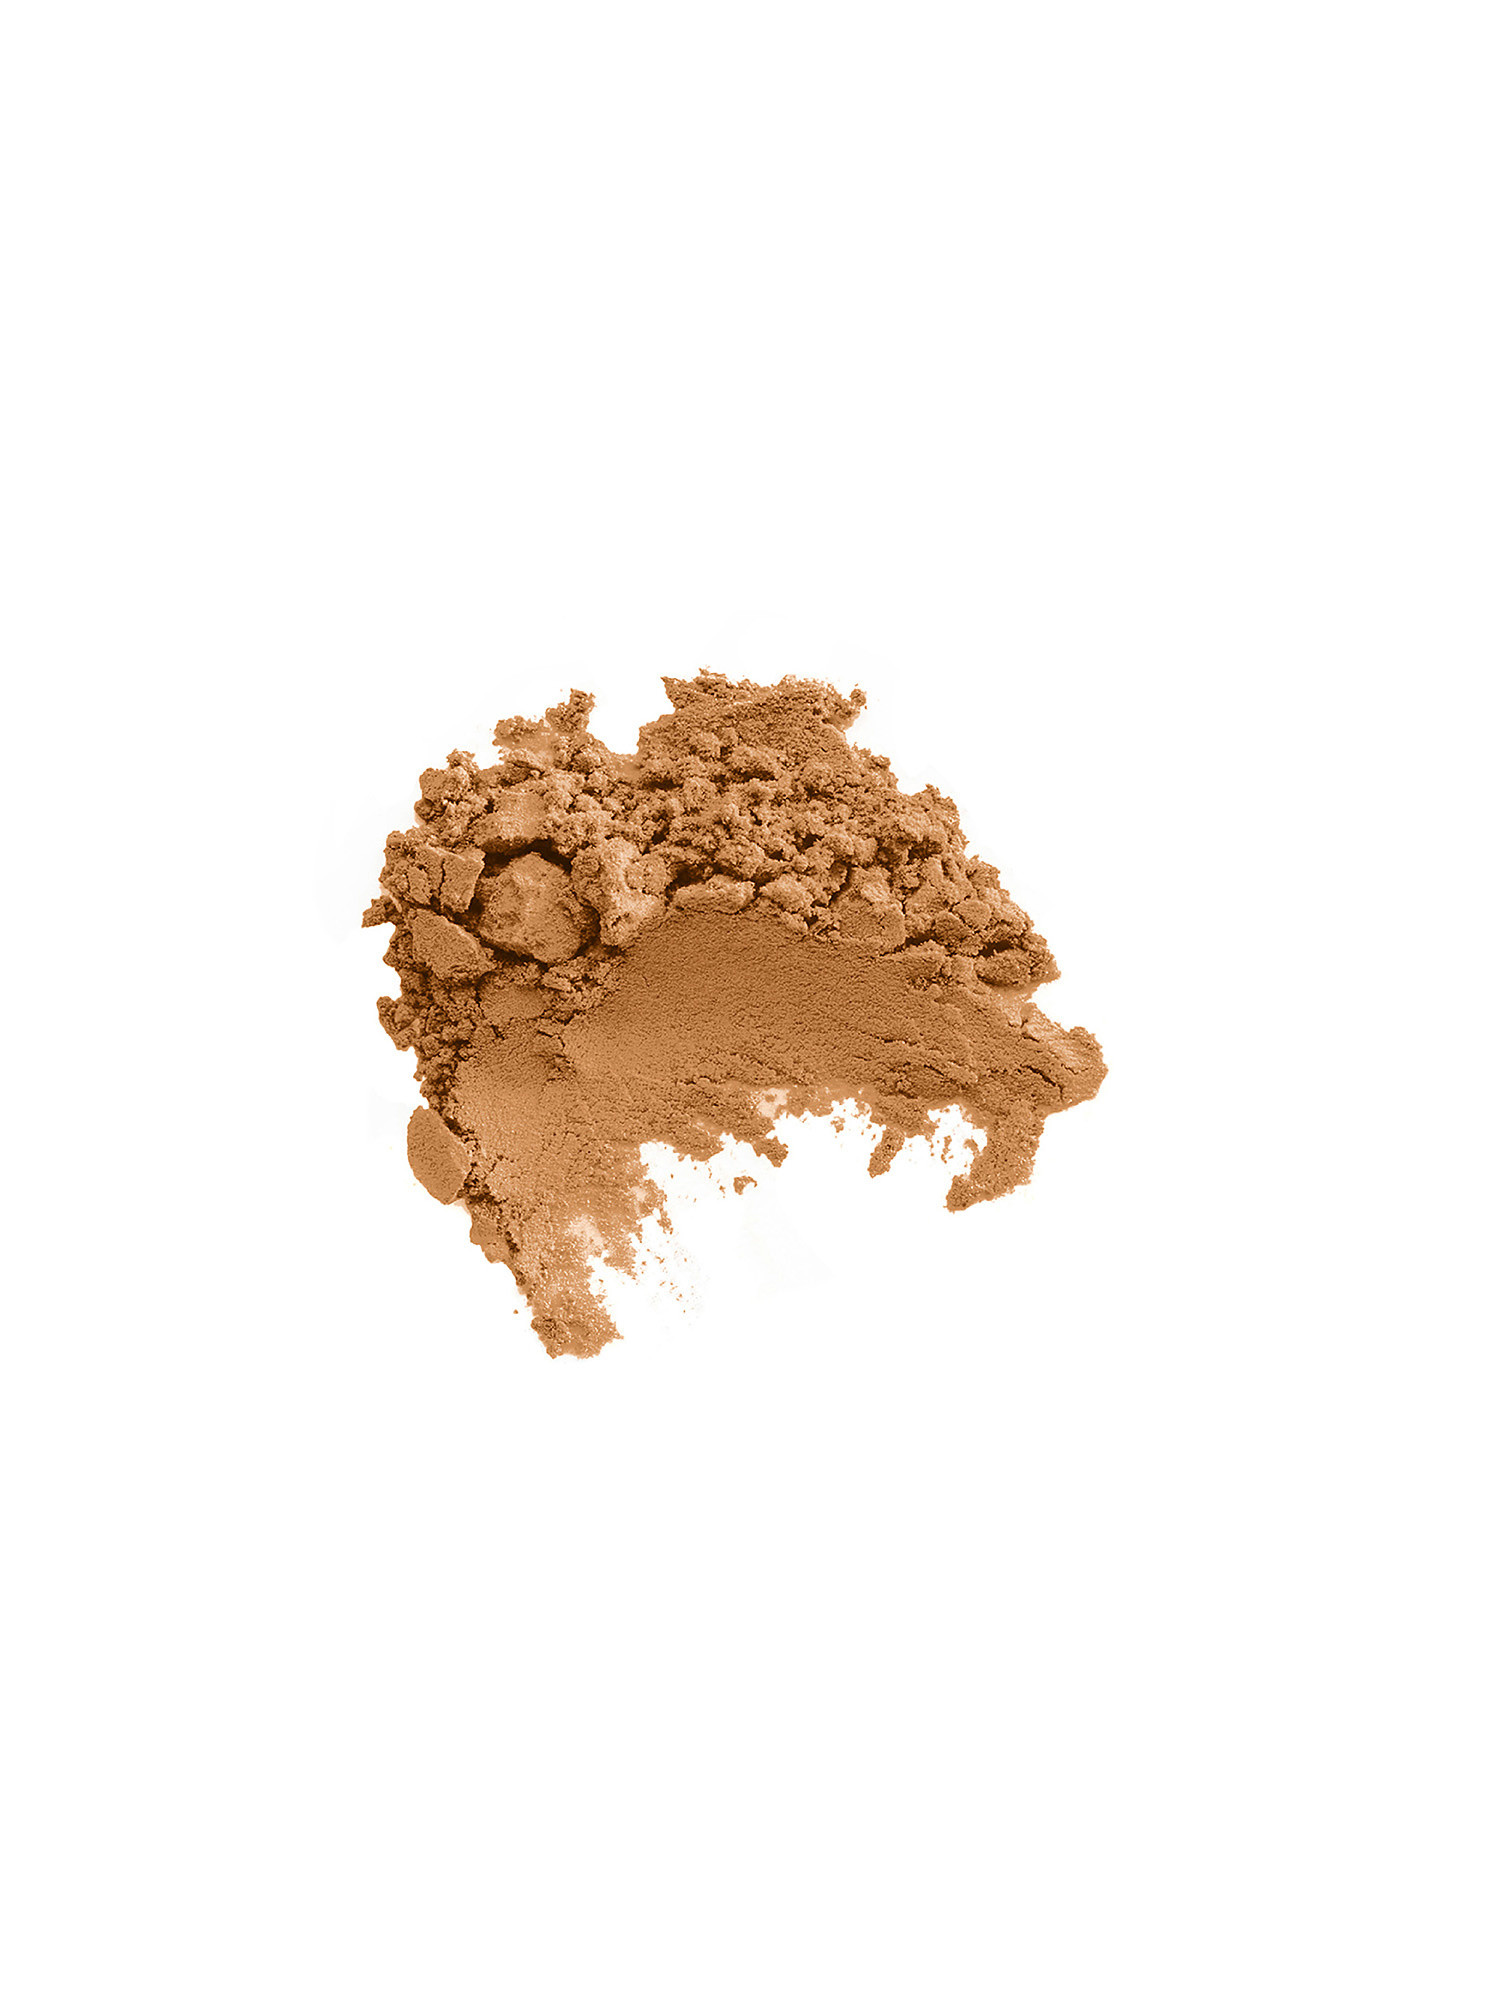 Cipria Trasparente In Polvere Transparent Powder - 02 Neutro trasparente pelli medio-scure, Bianco, large image number 1